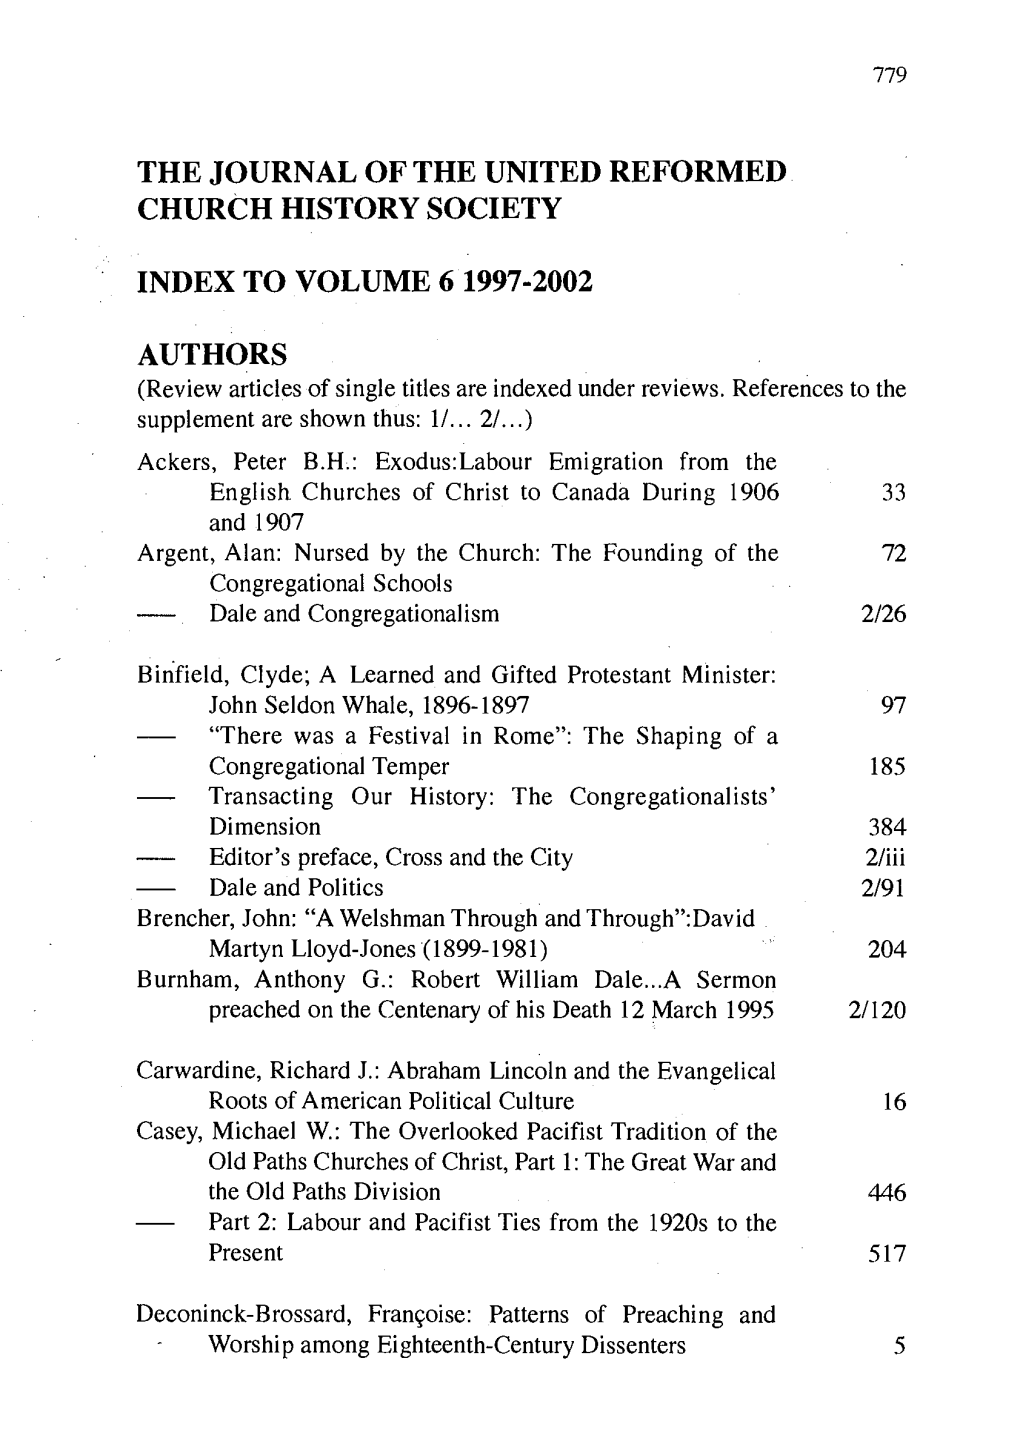 Index to Volume 6 1997-2002